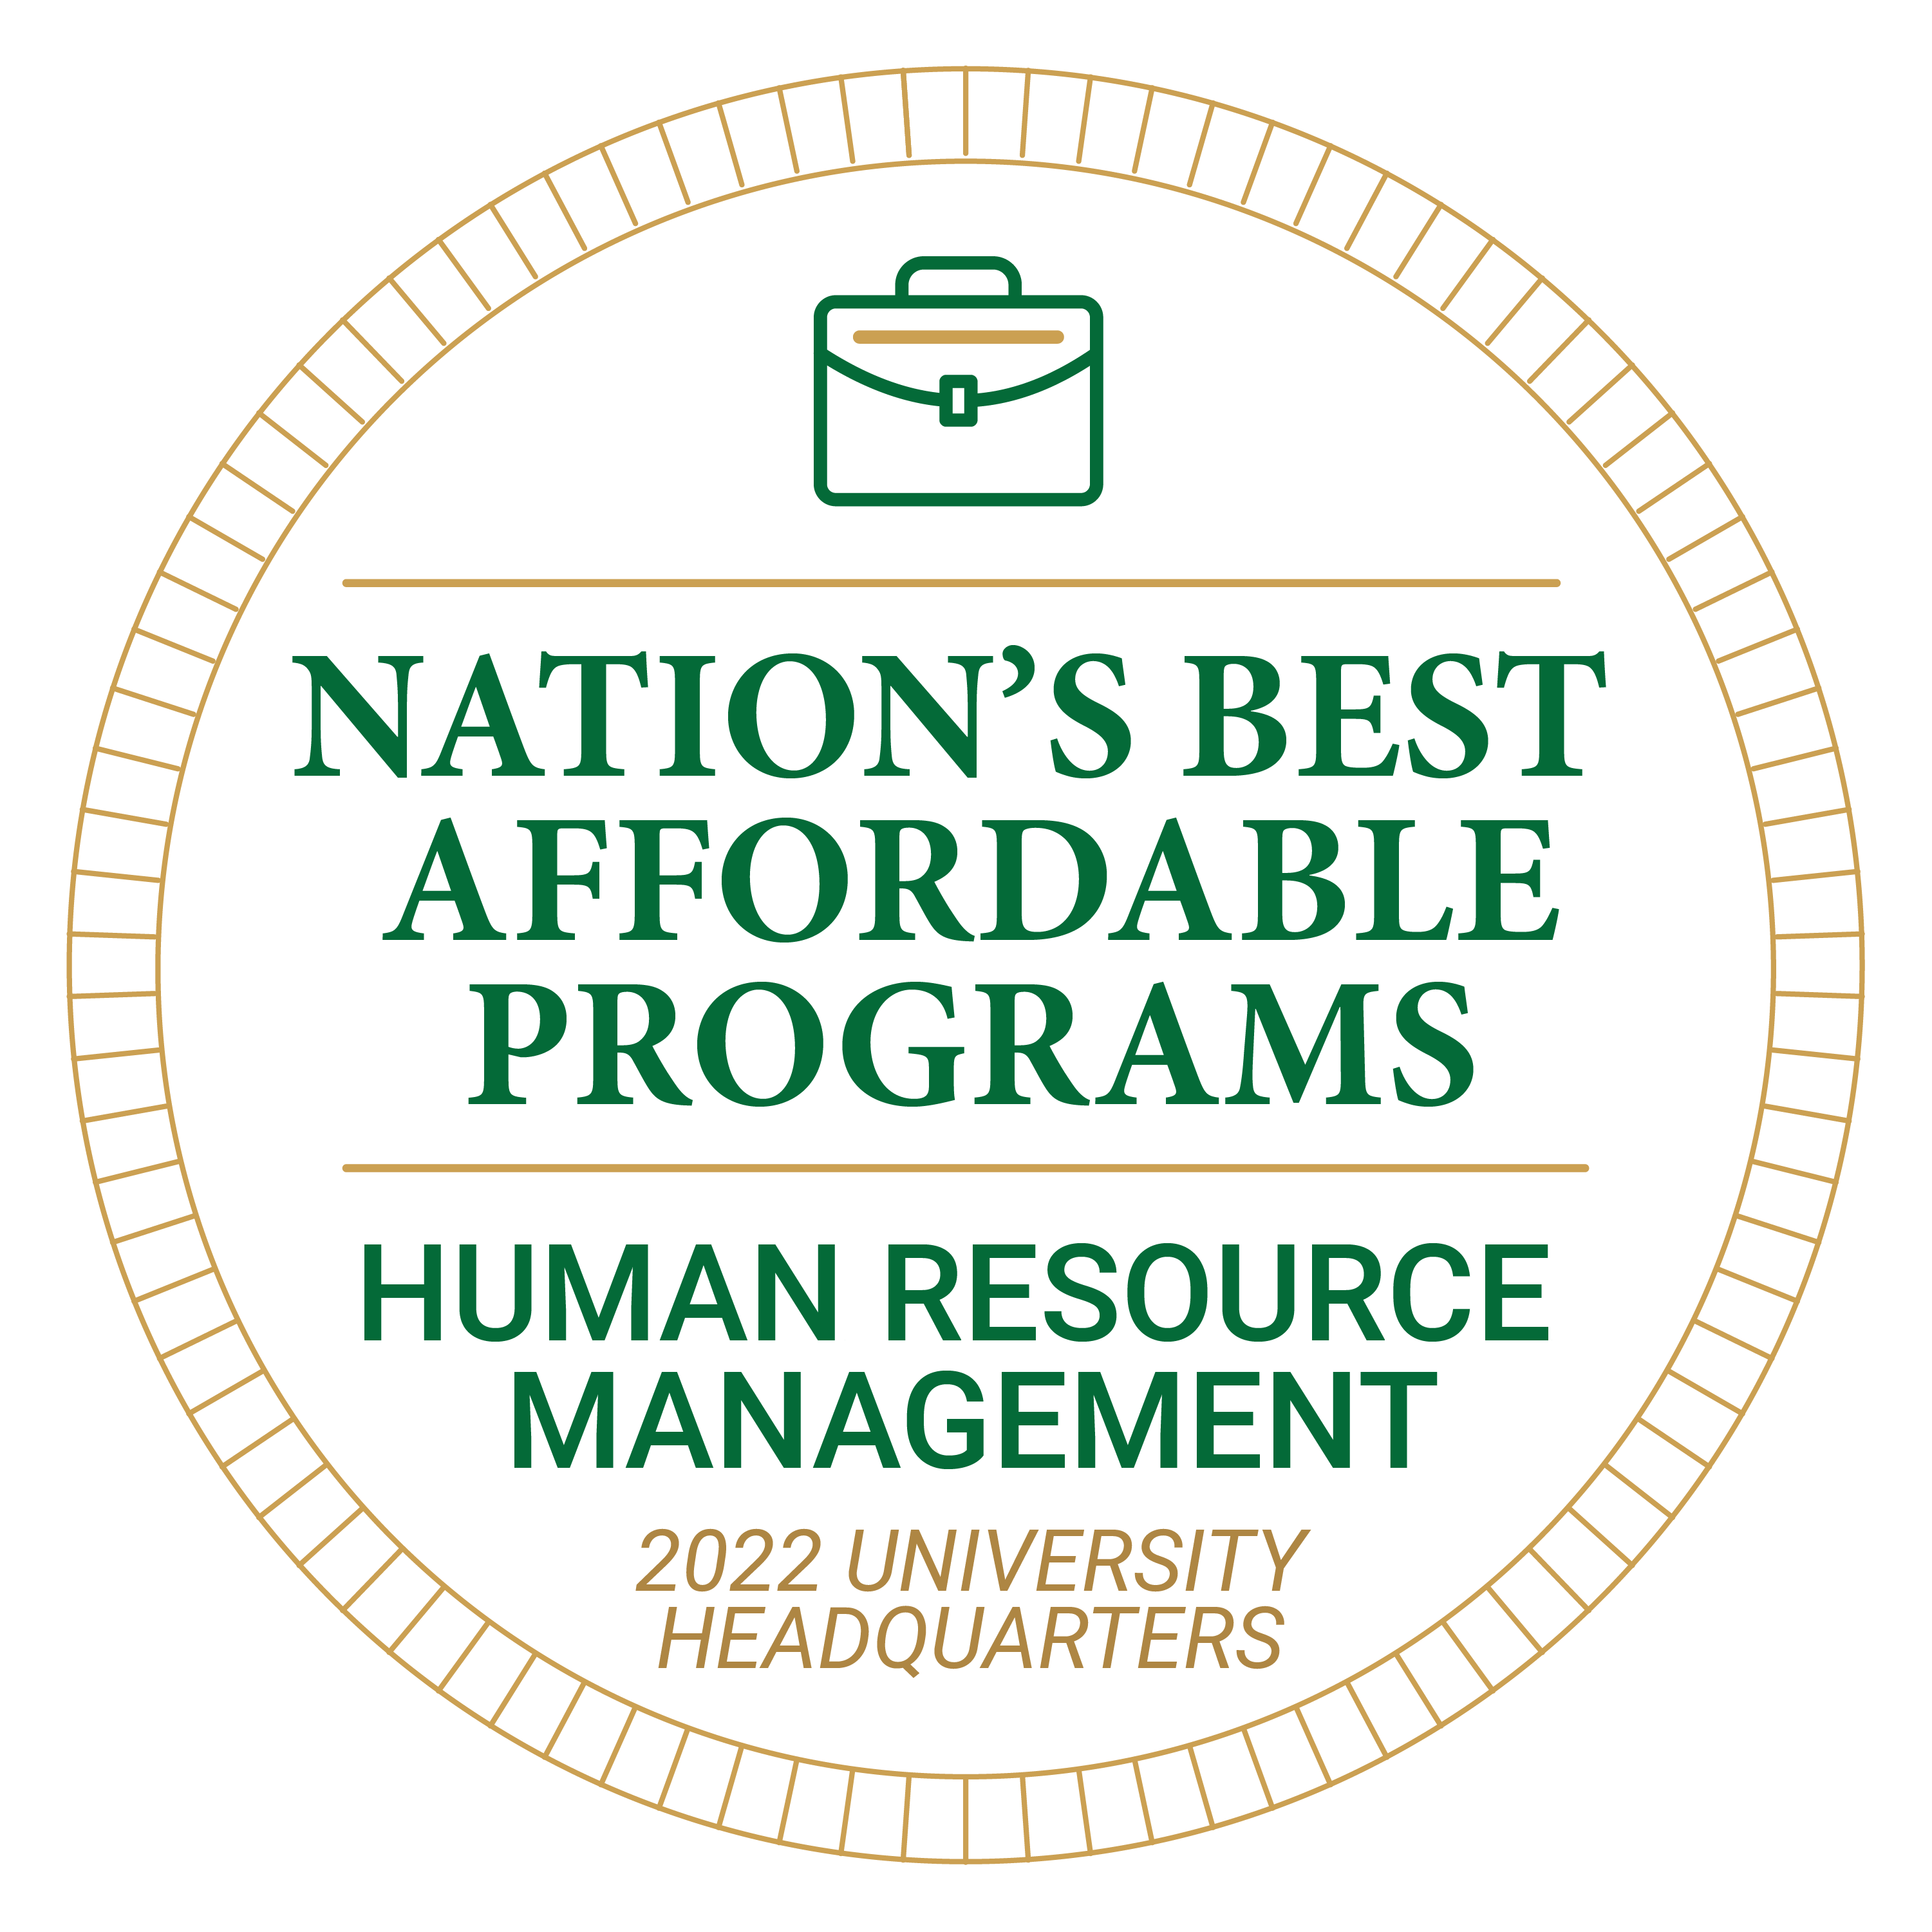 2022 University Headquarters Nation's Best Affordable programs Human Resource Management